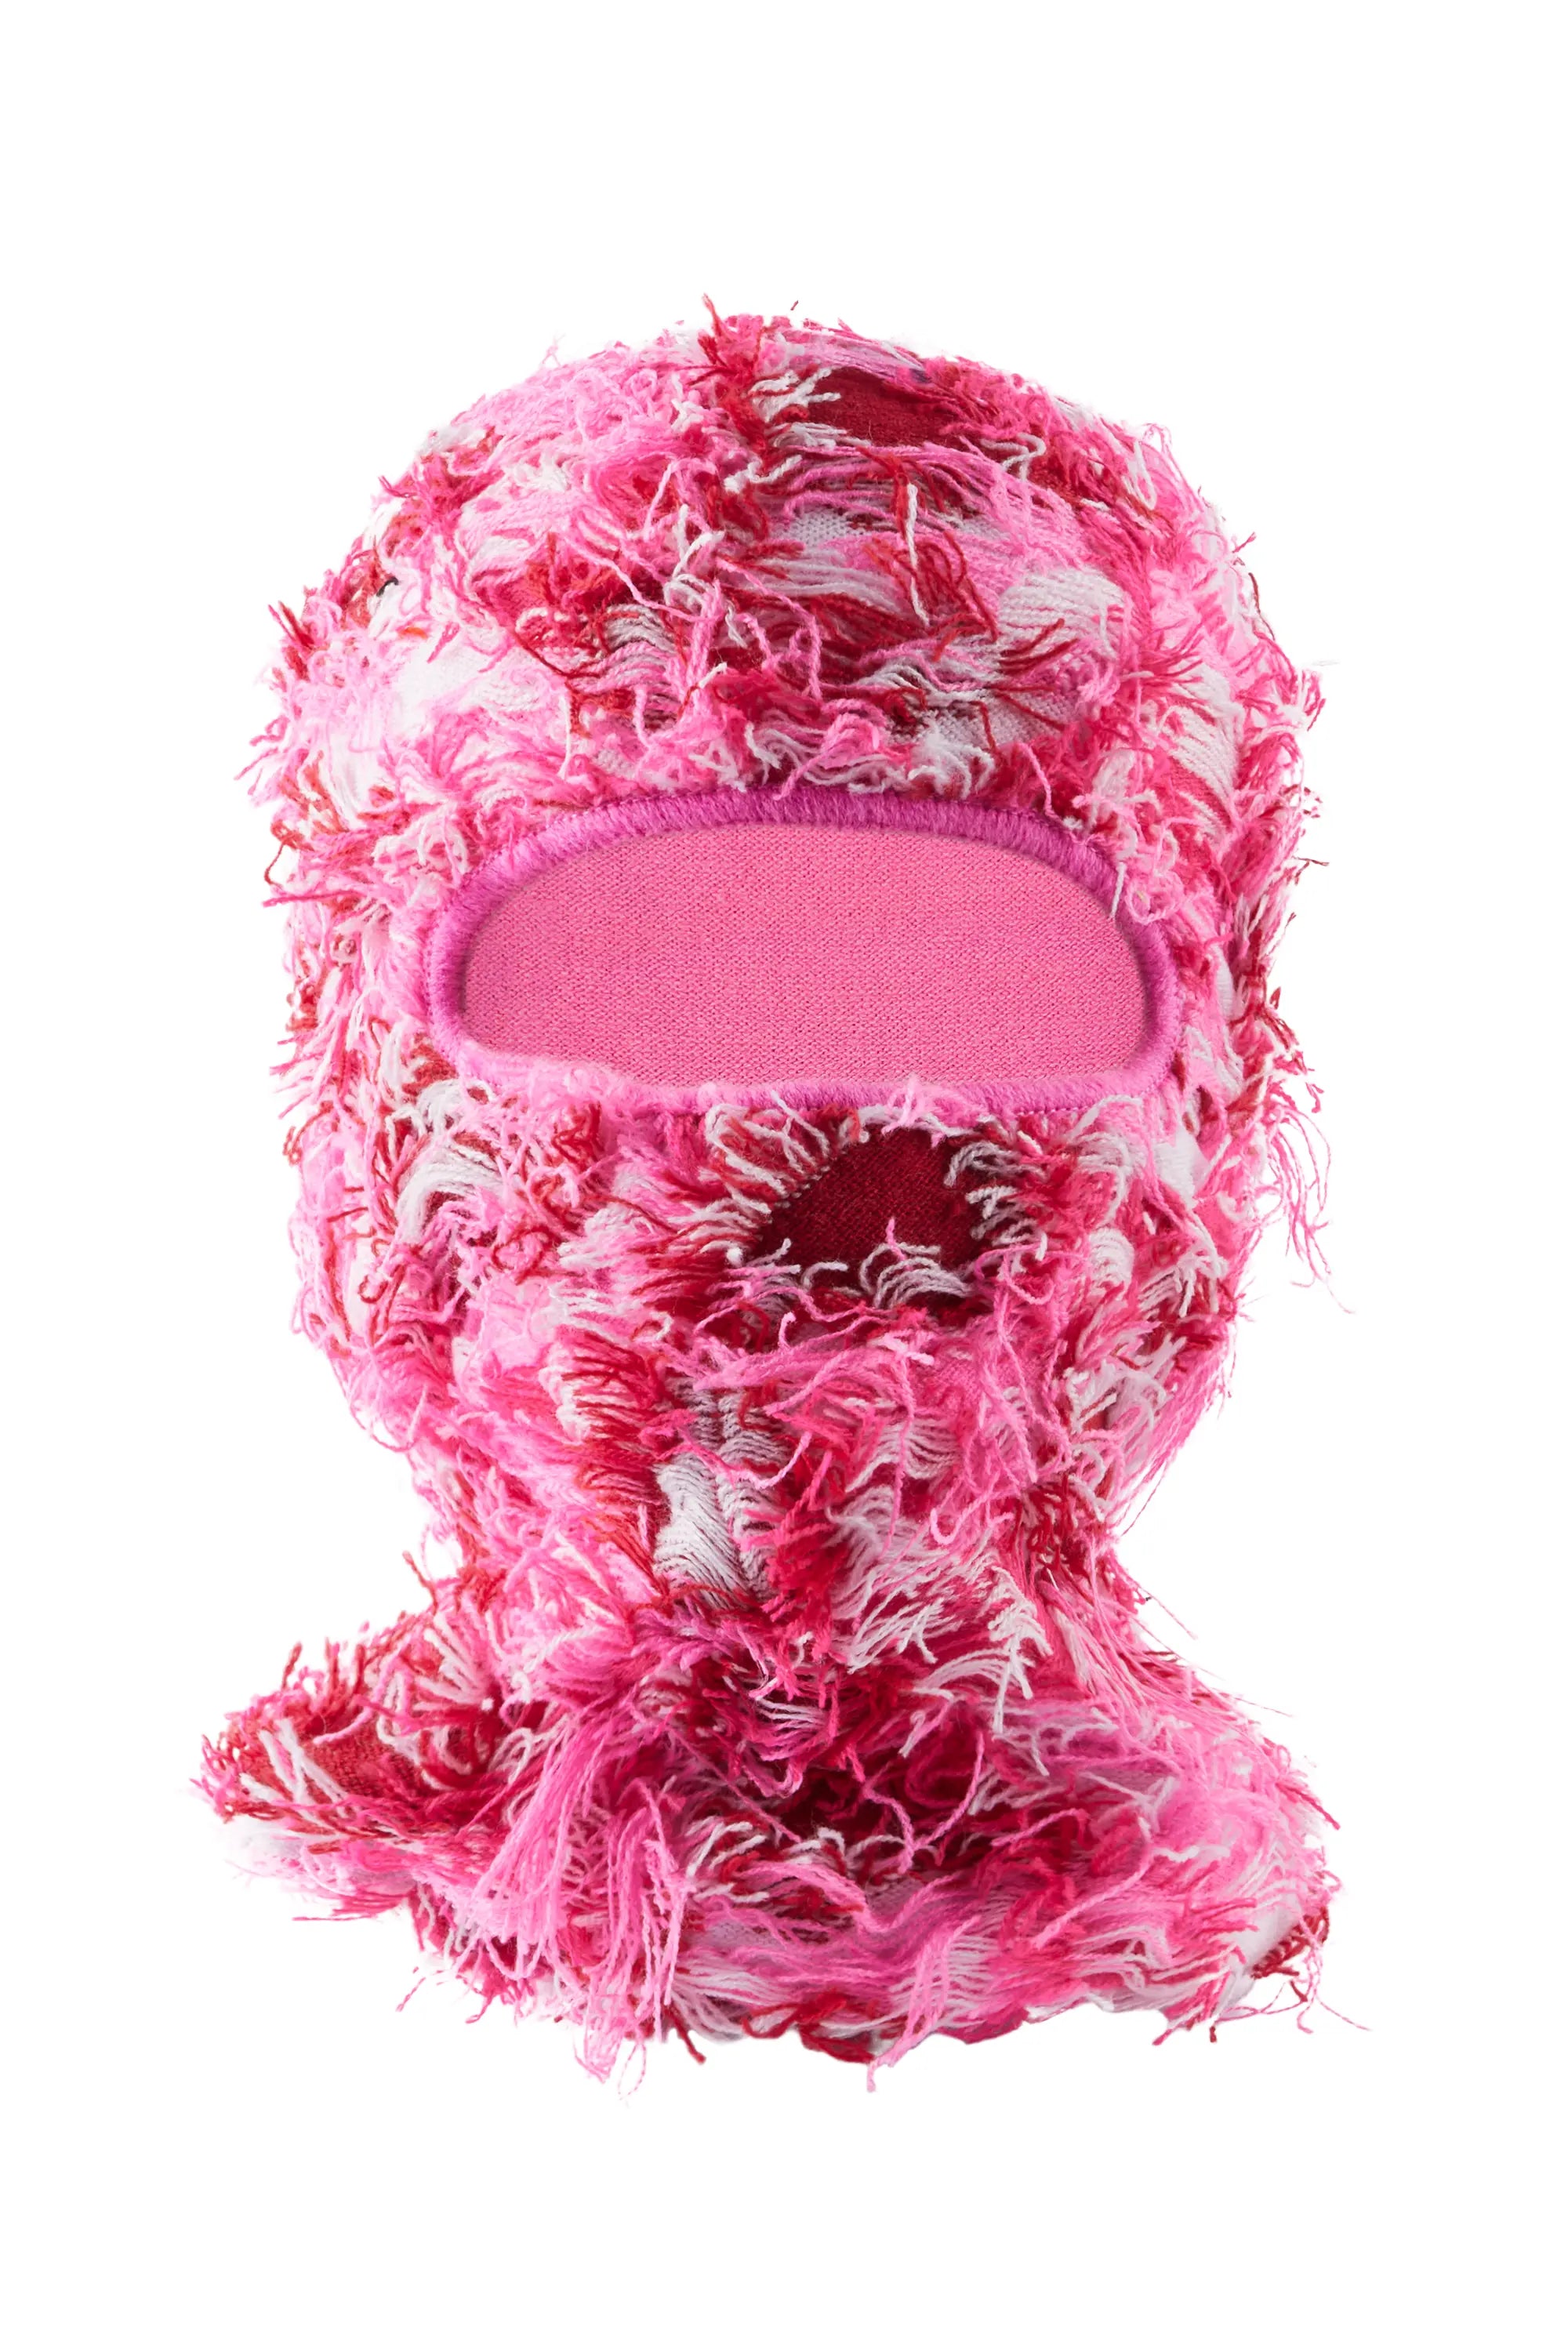 Otto Pink Fuzzy Ski Mask